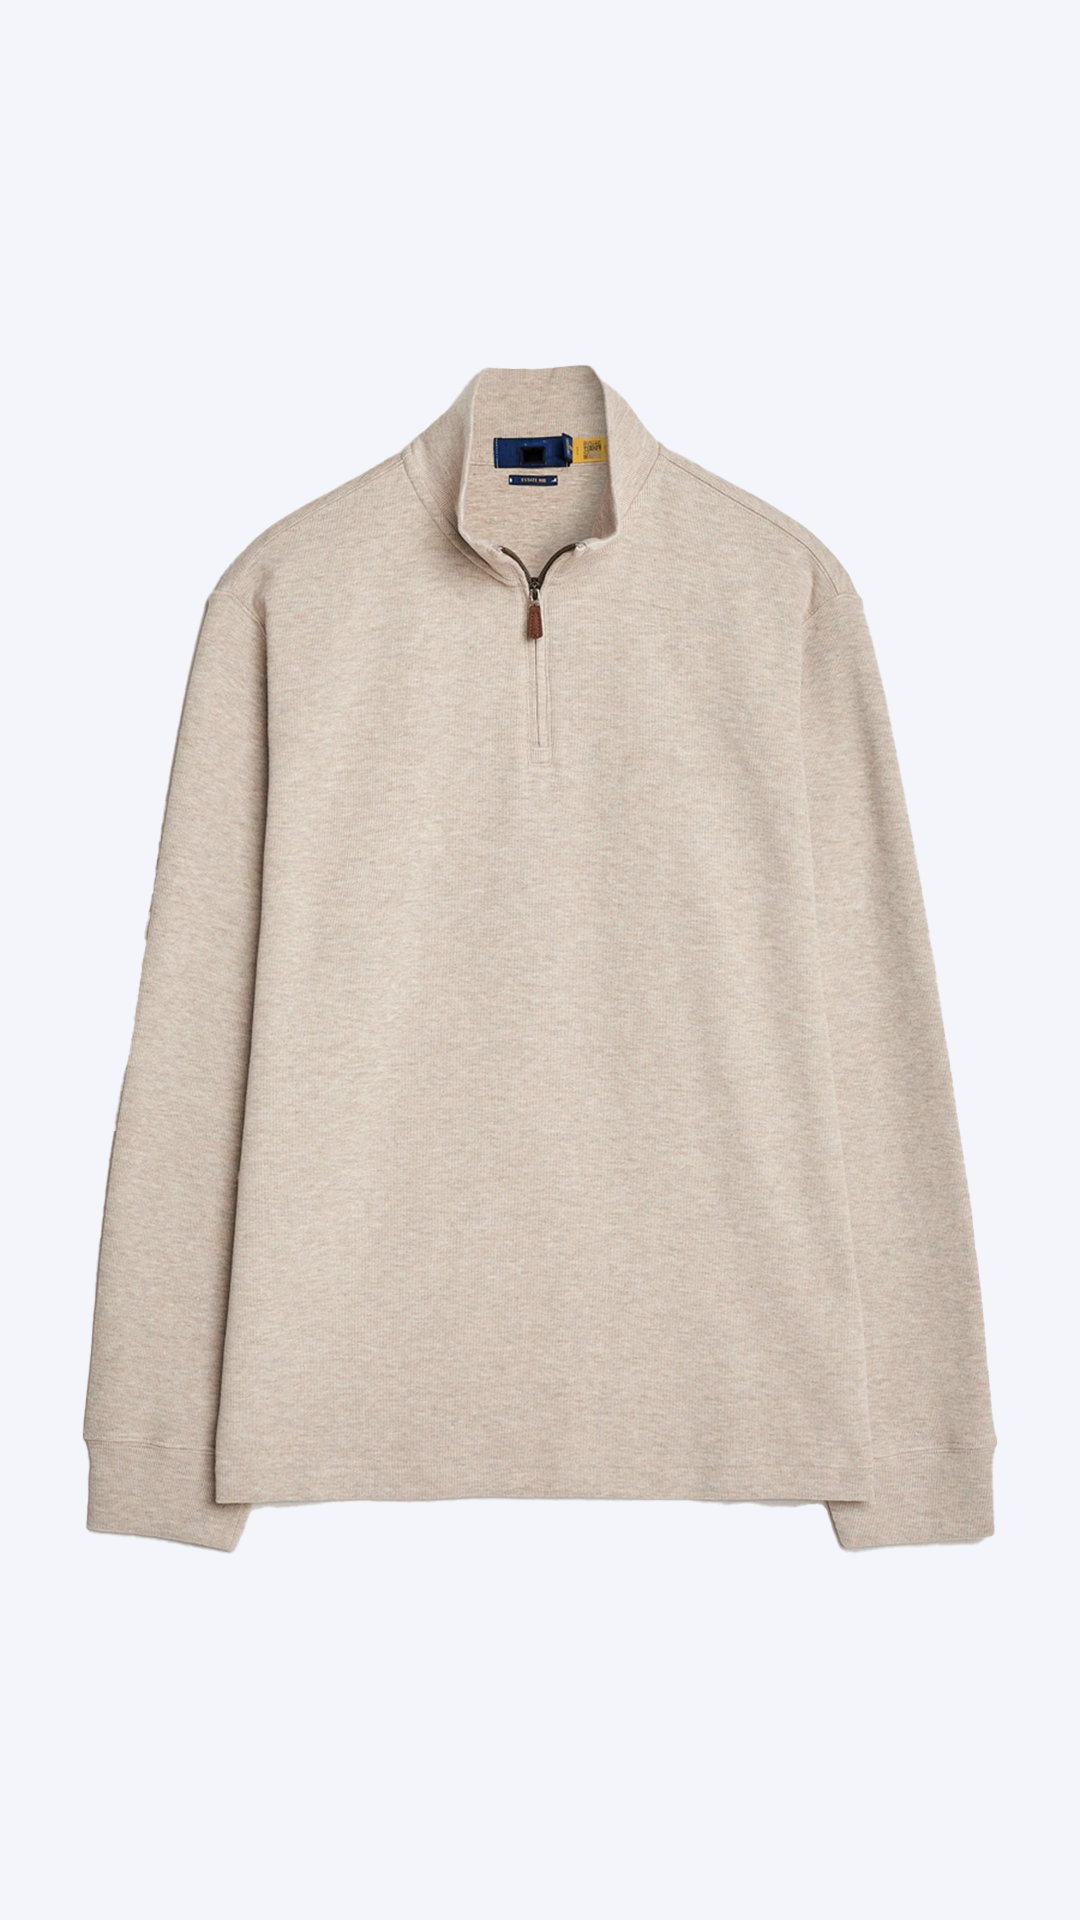 90s Style Oversized Half Zip Sweater